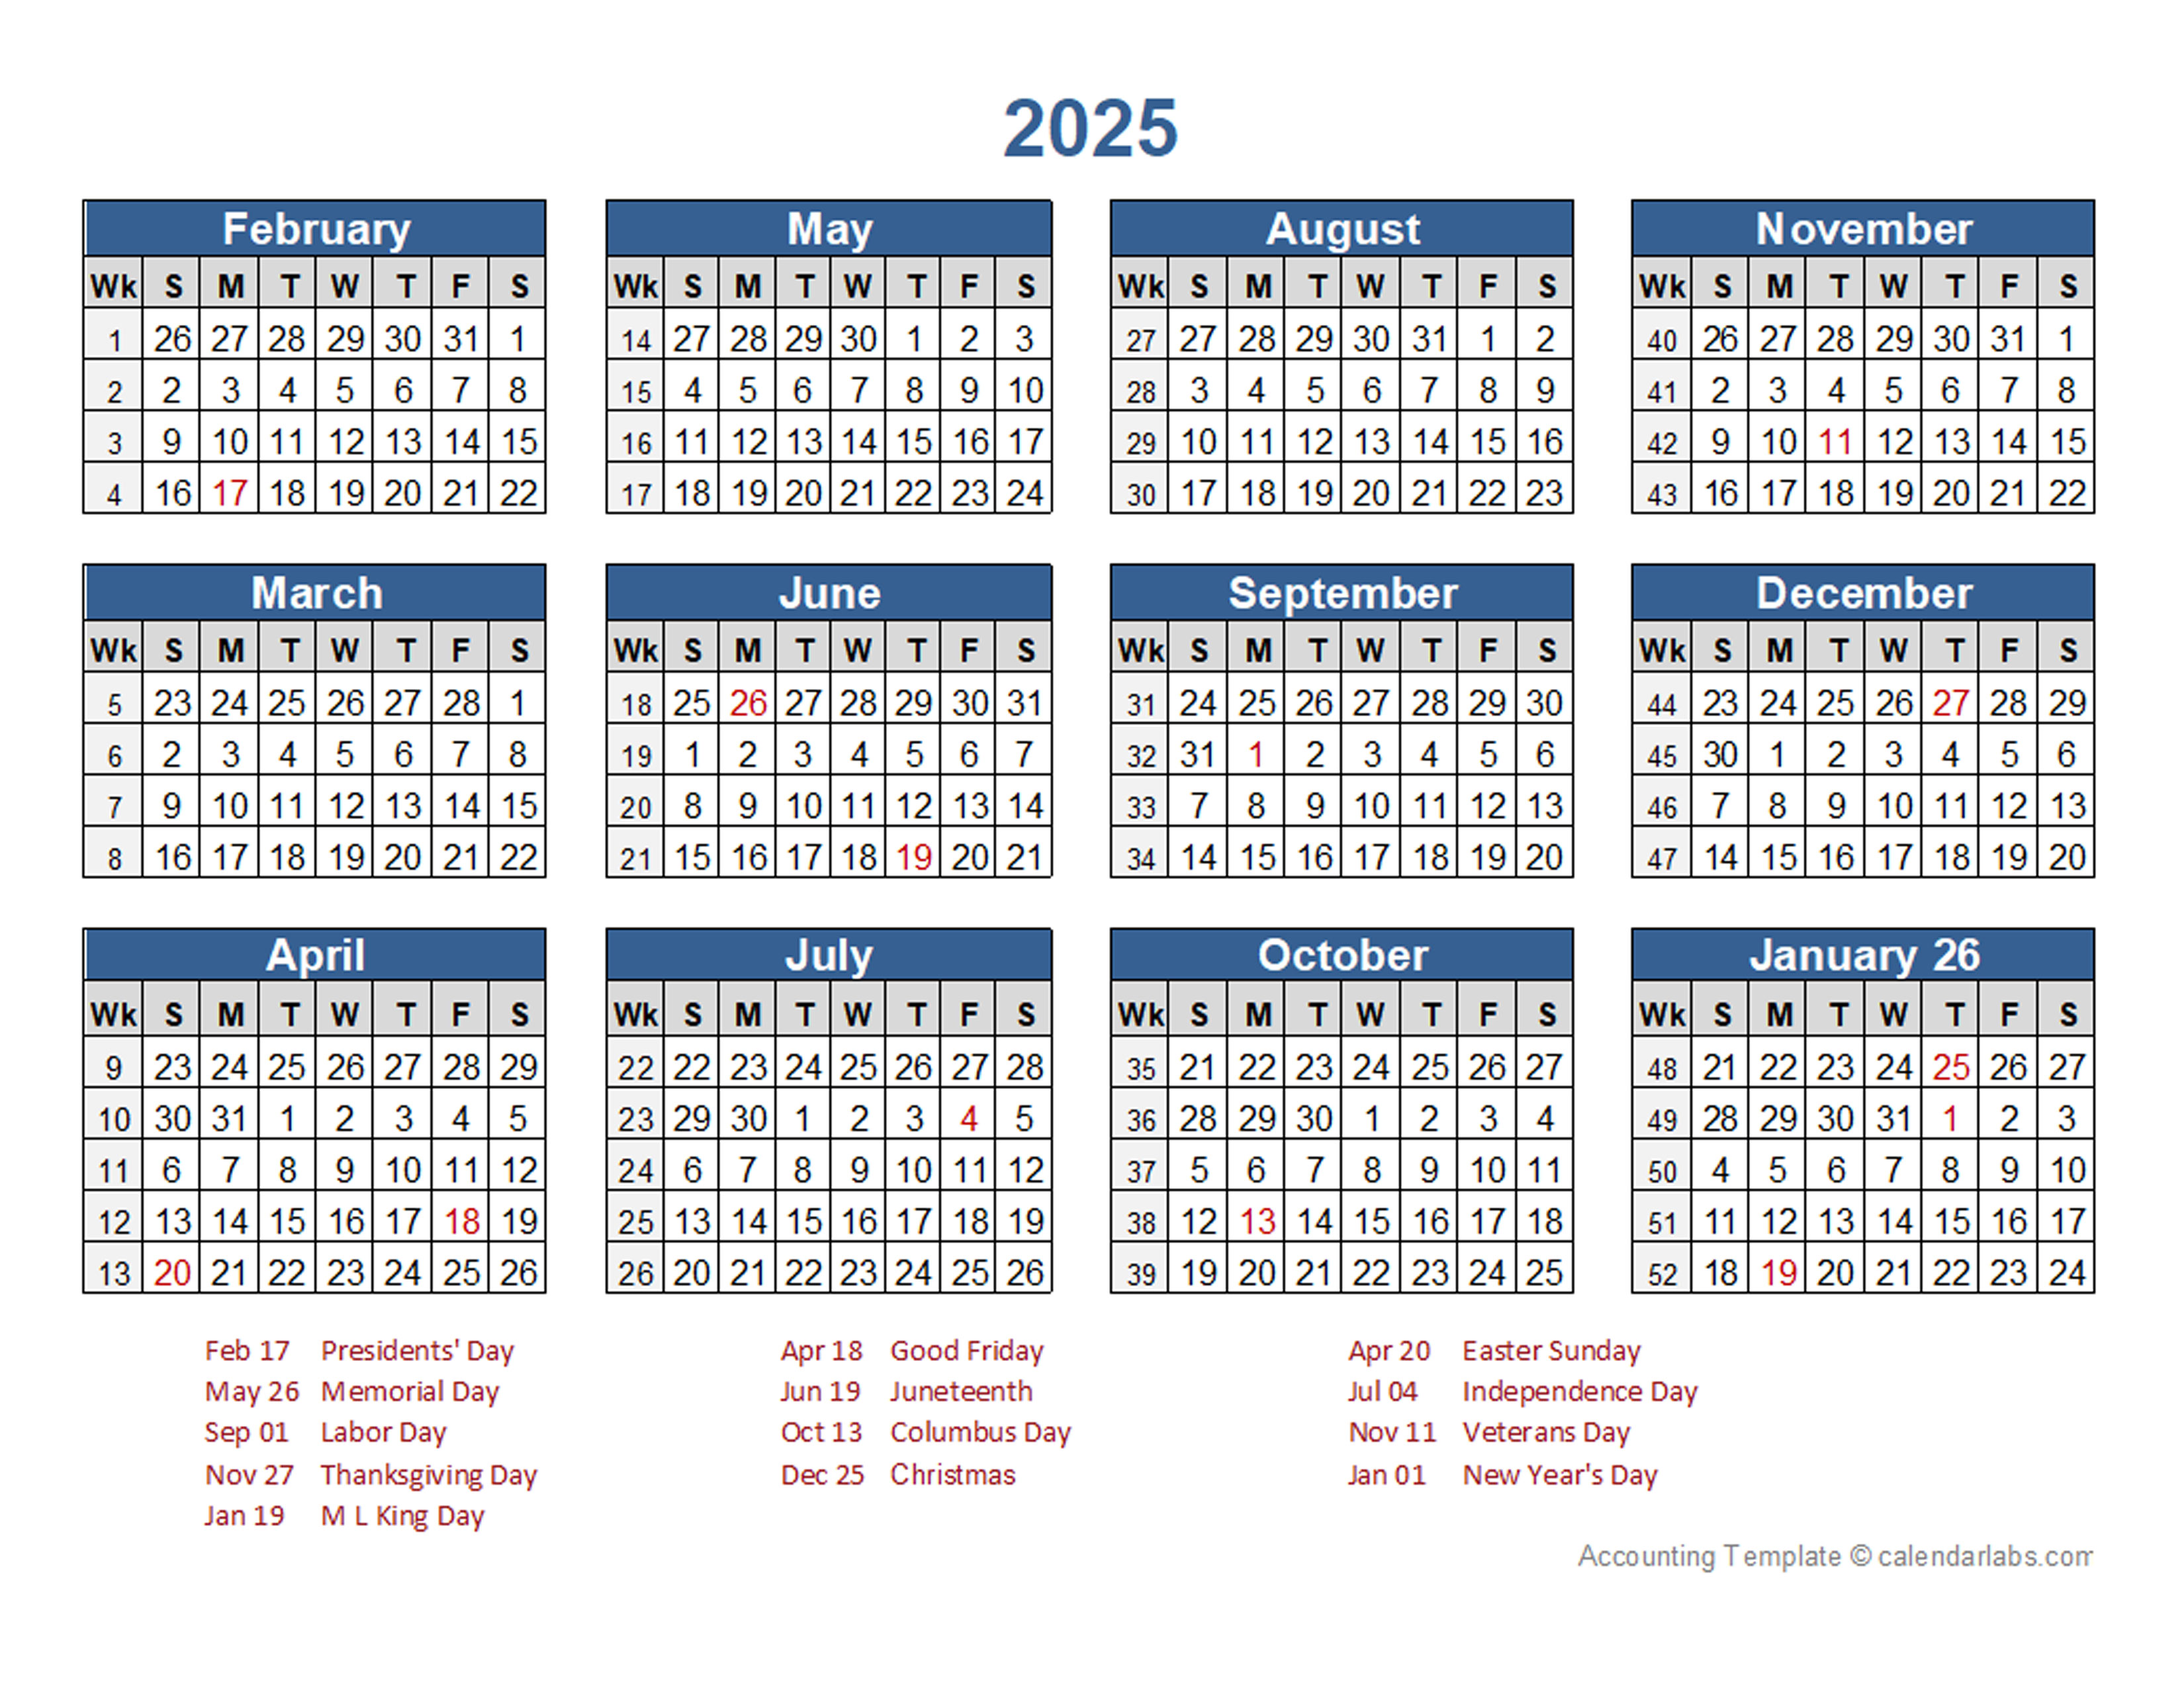 2025 Retail Accounting Calendar 4-4-5 - Free Printable Templates